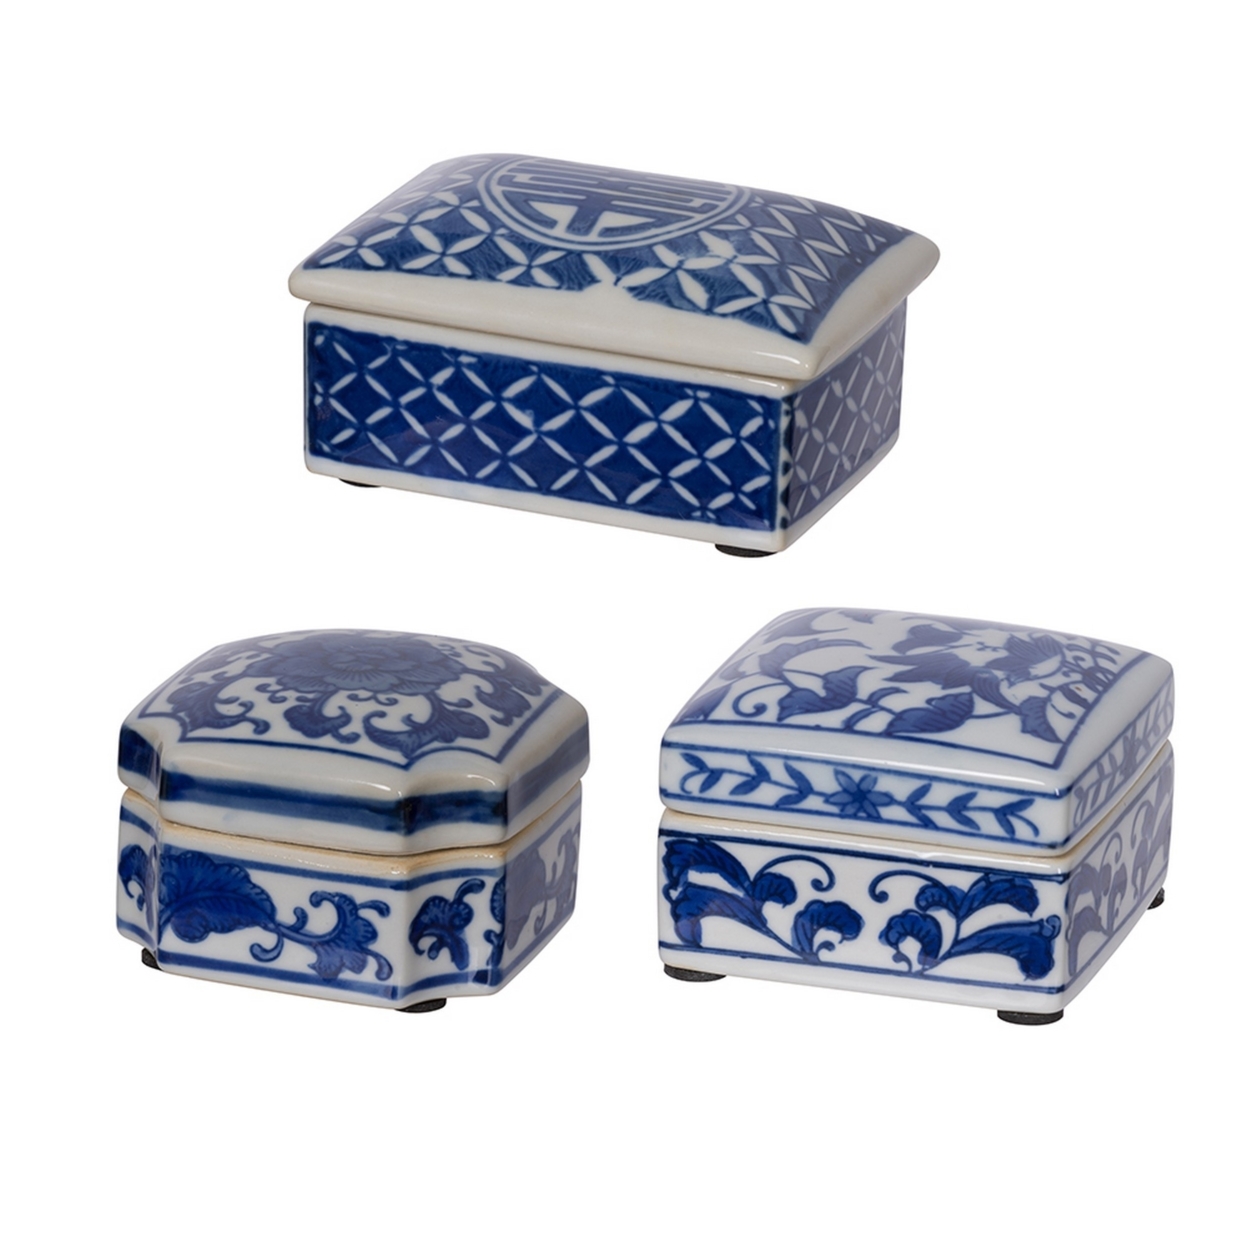 Set Of 3 Decorative Boxes, White And Blue Porcelain Pottery, Floral Designs- Saltoro Sherpi